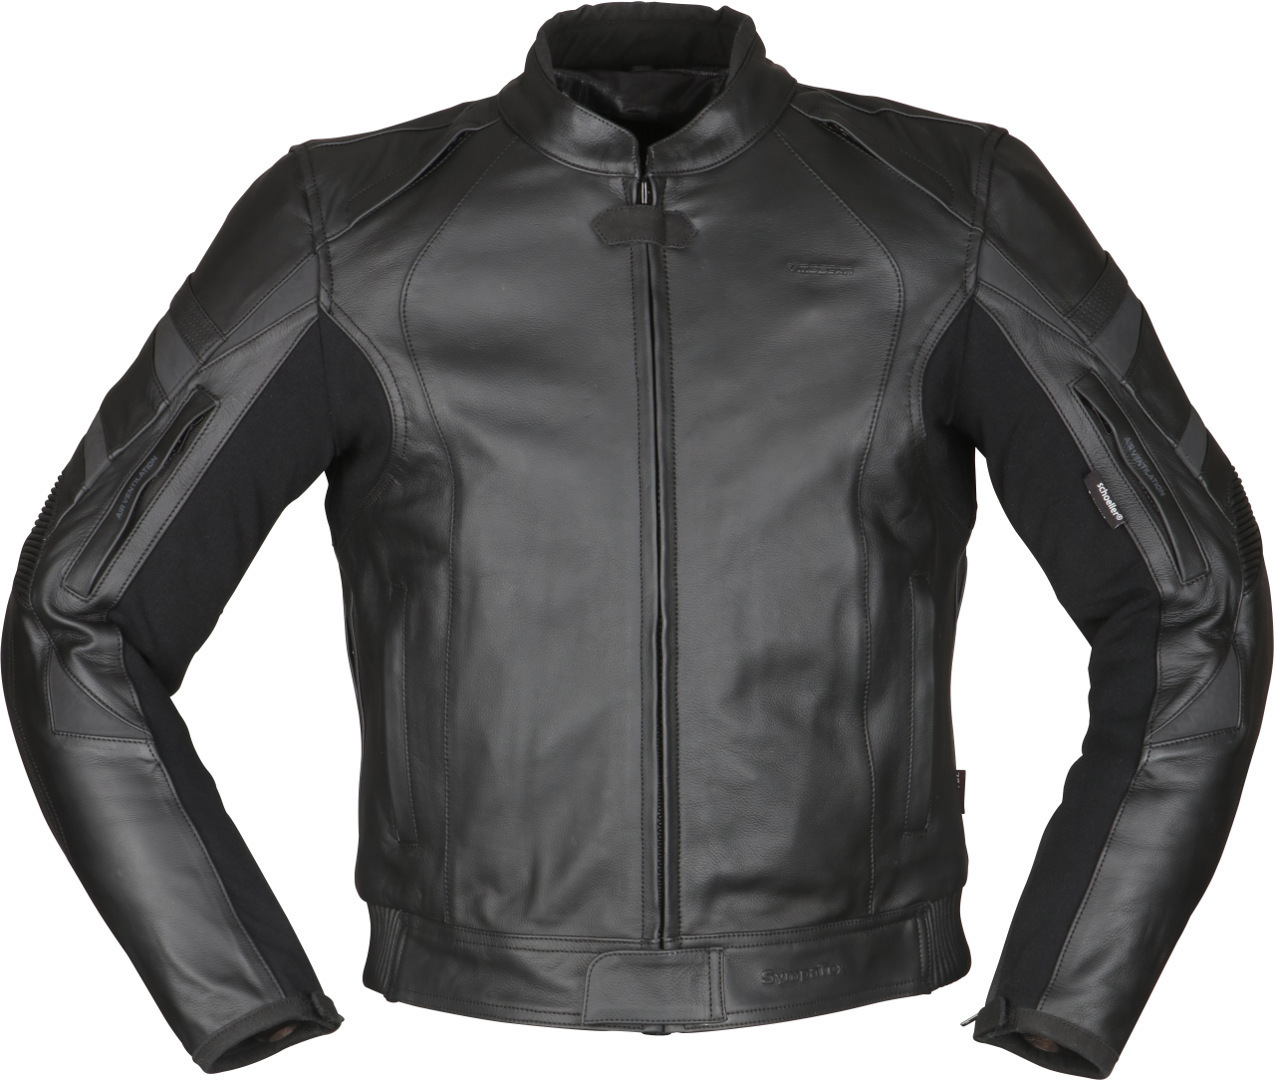 Modeka Tourrider II Motorrad Lederjacke, schwarz, Gre XL, schwarz, Gre XL